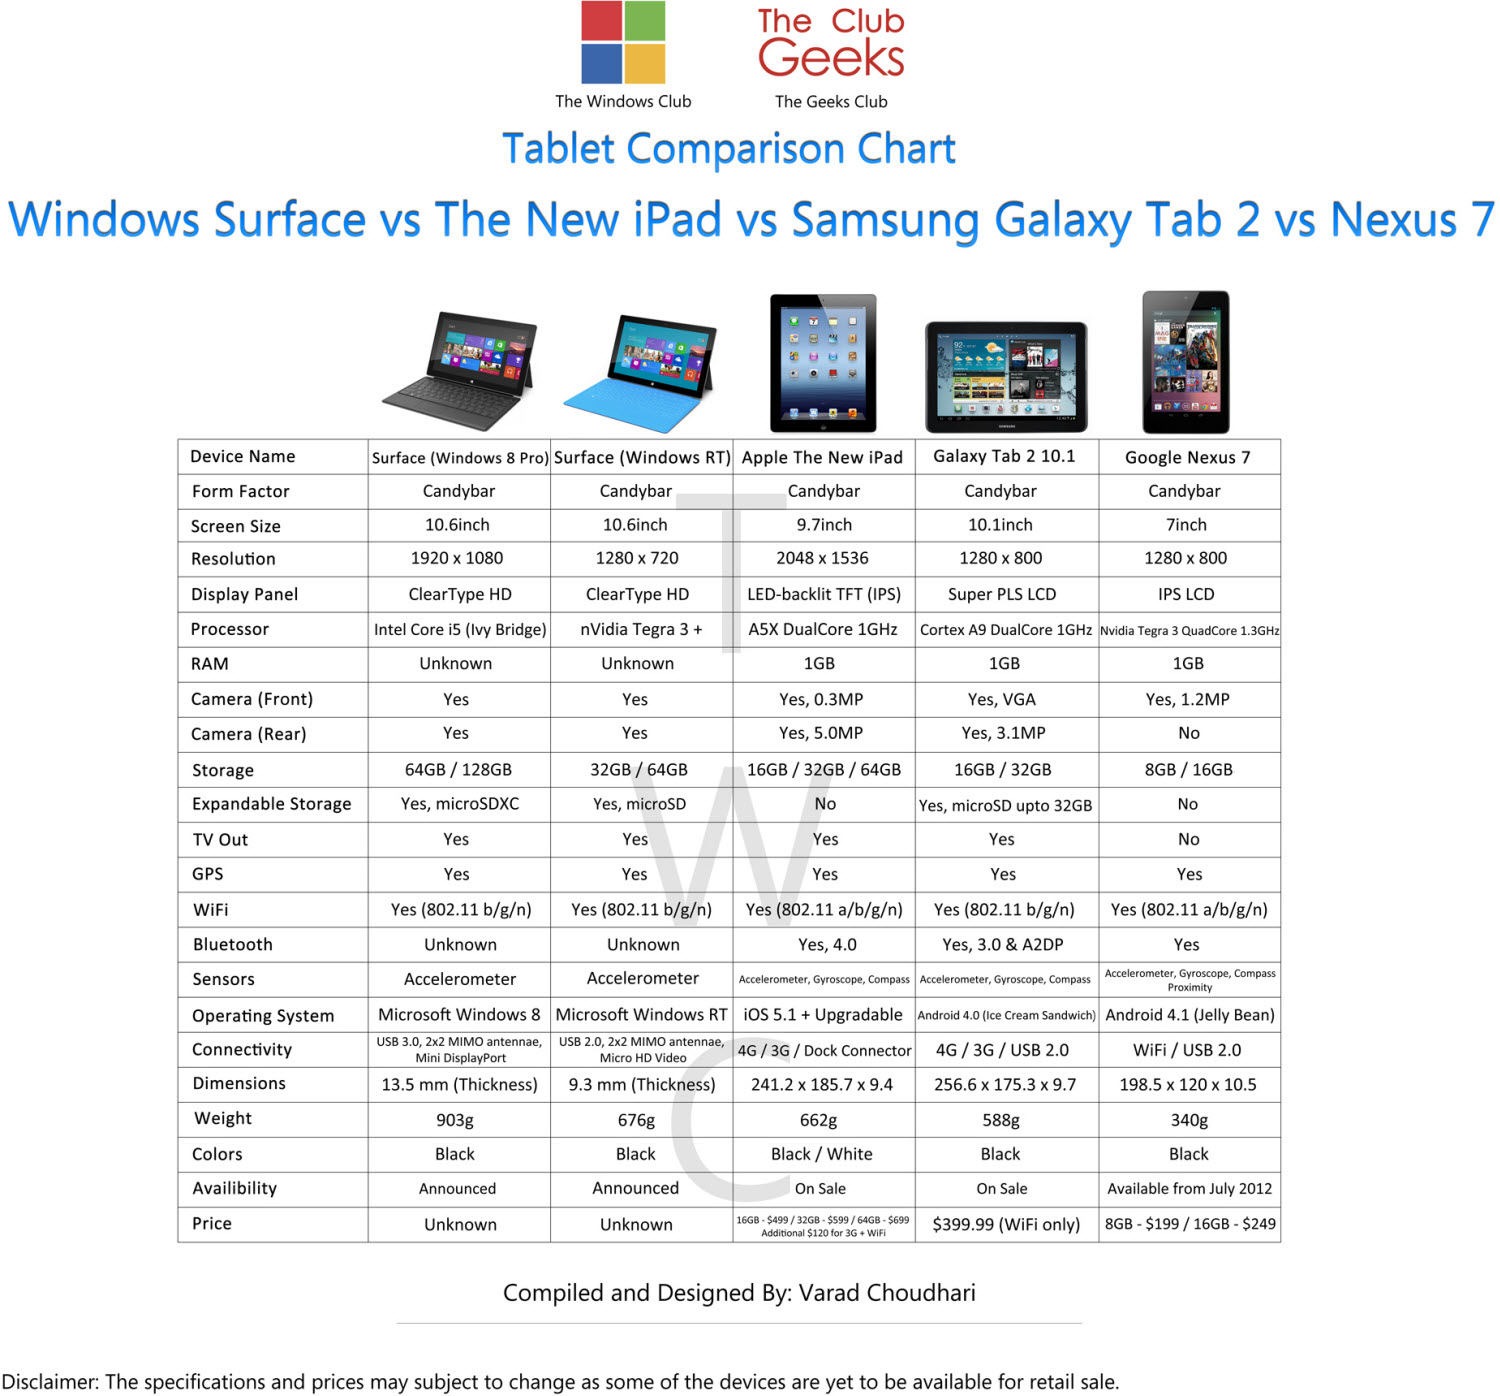 Windows Surface vs New iPad vs Samsung Galaxy Tab 2 vs Nexus 7